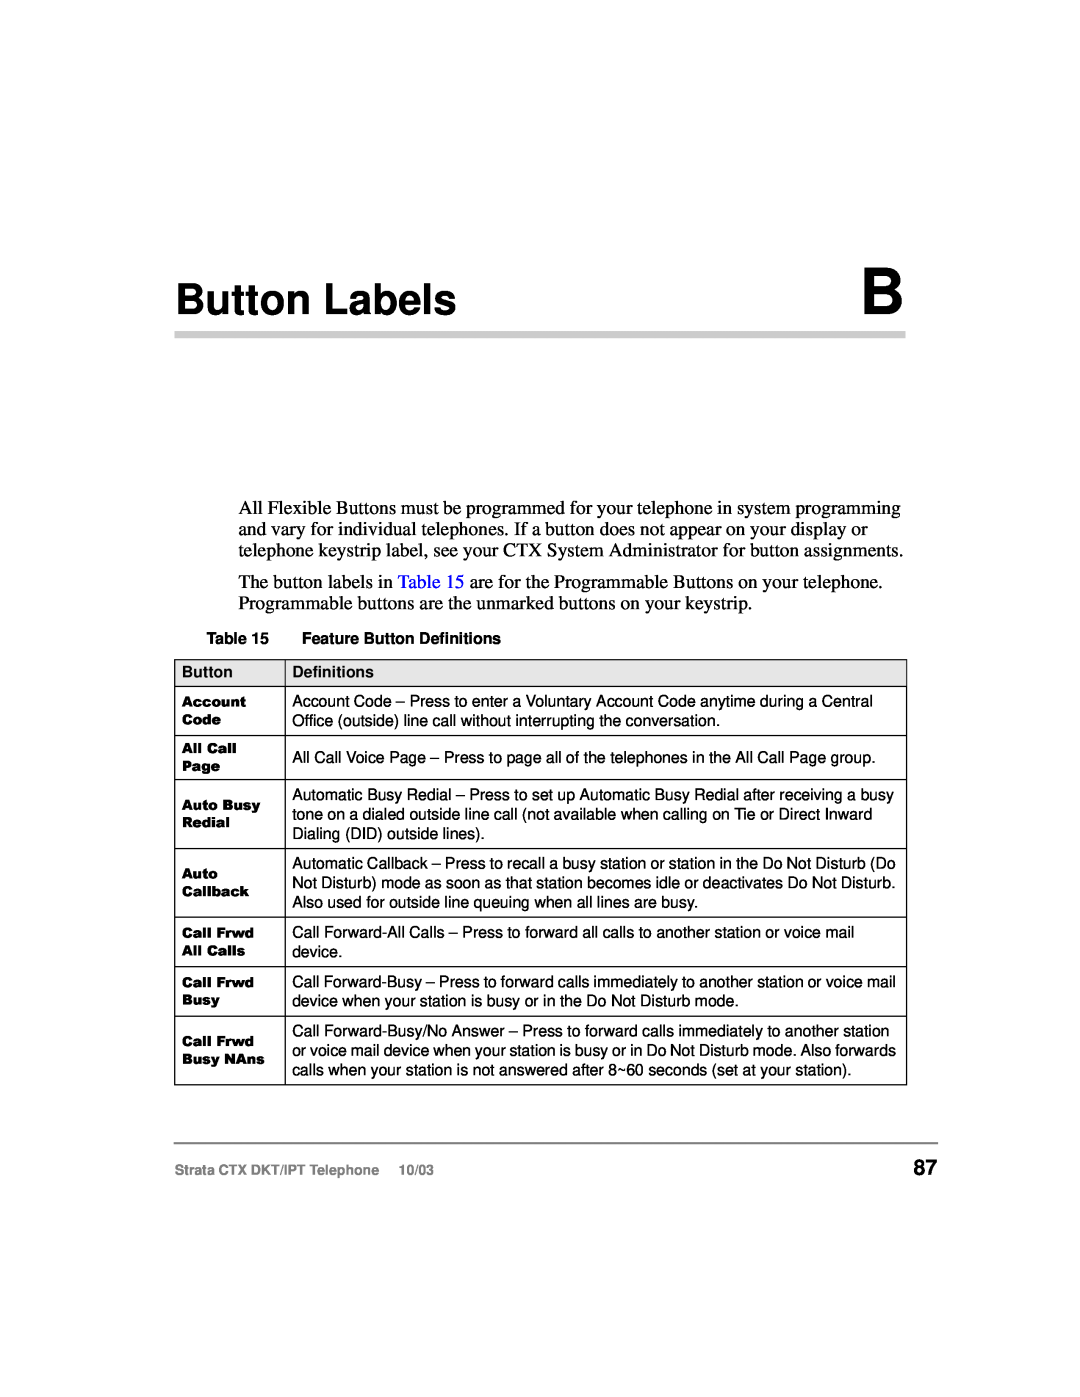 Toshiba DKT, IPT manual Button Labels 